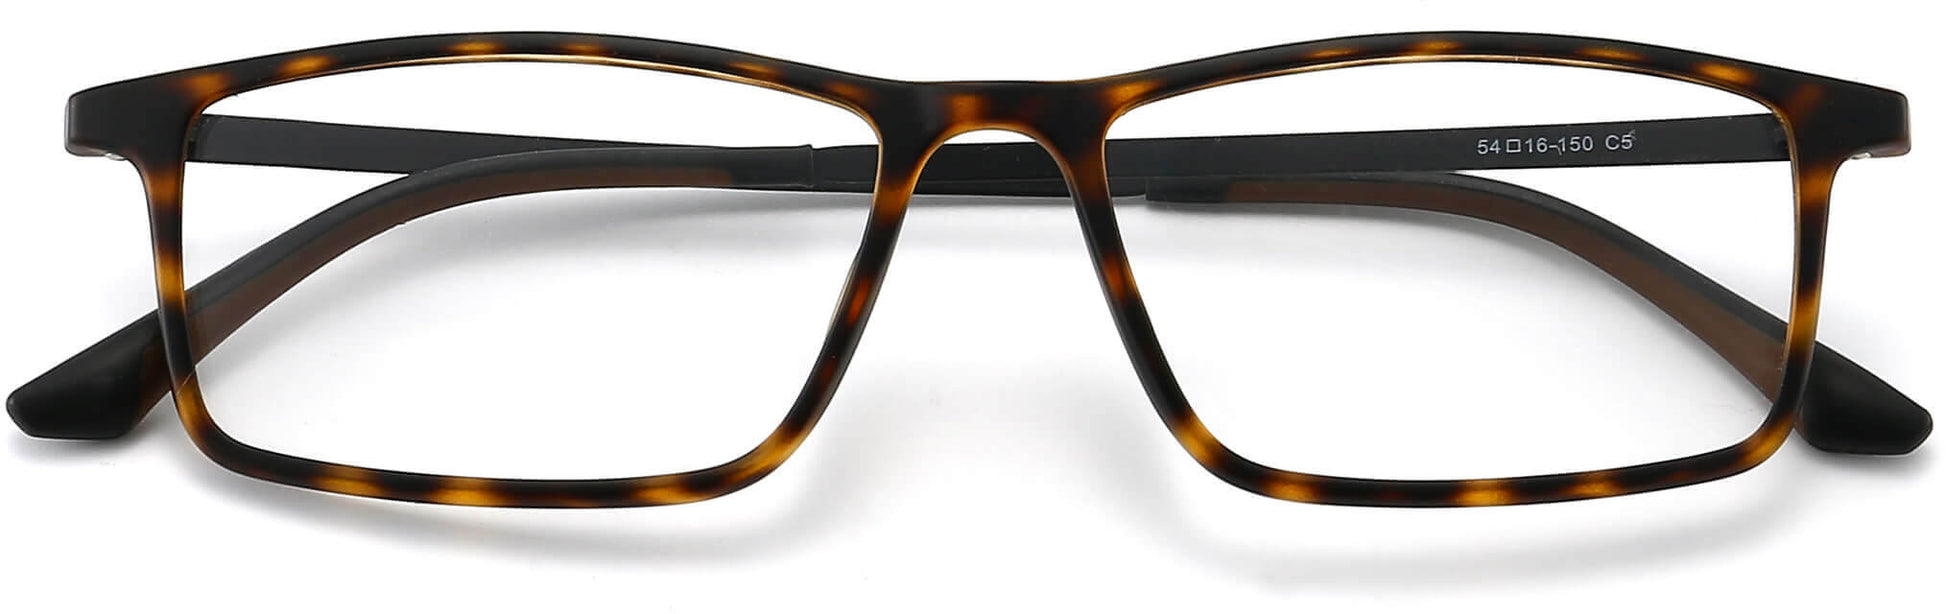 hago rectangle tortoise Eyeglasses from ANRRI, closed view